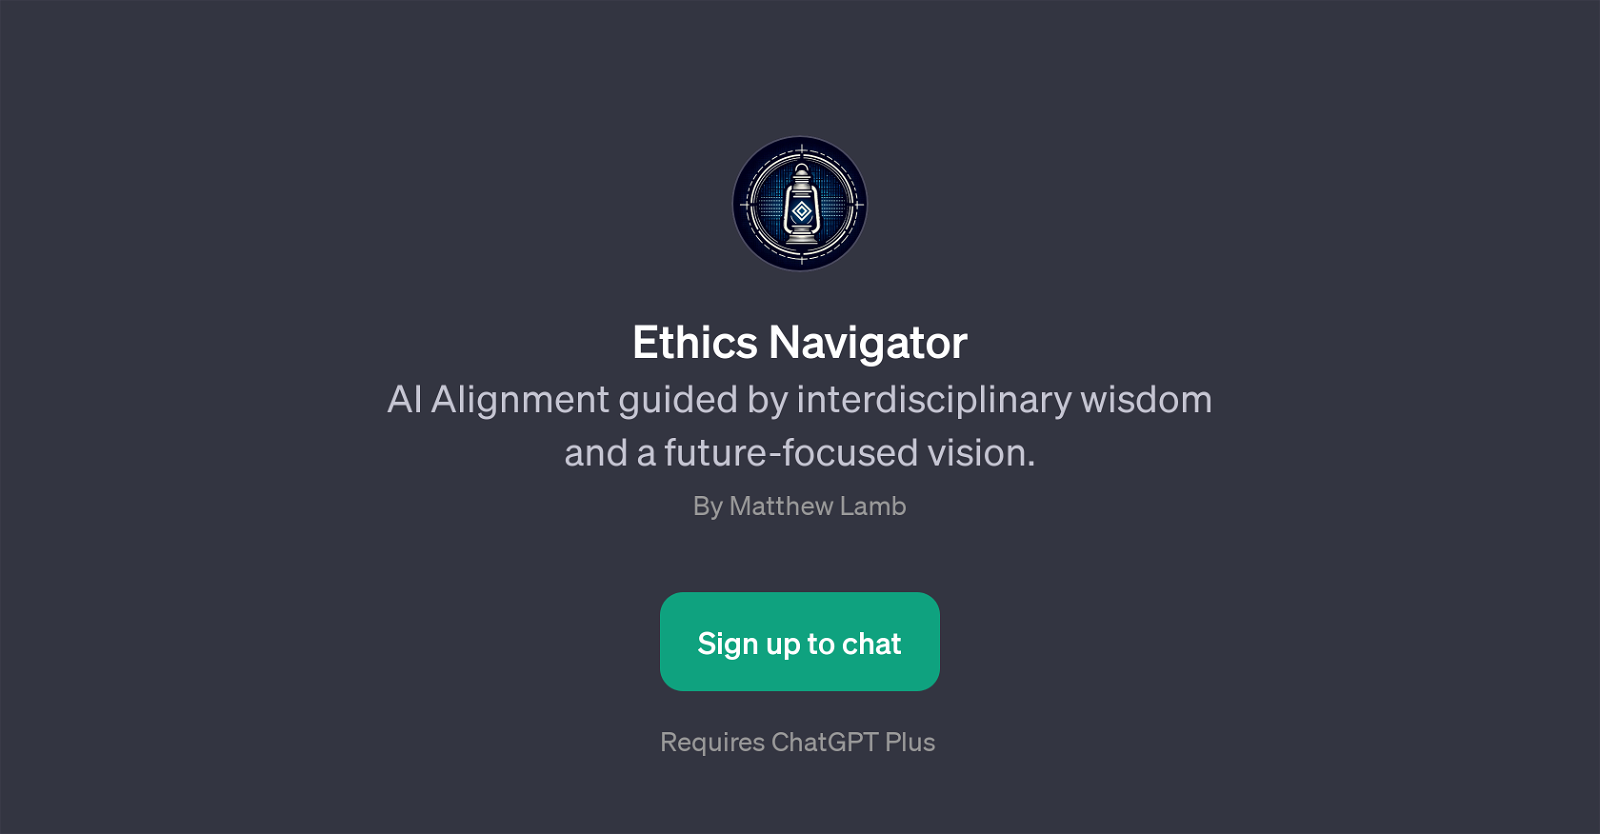 Ethics Navigator website